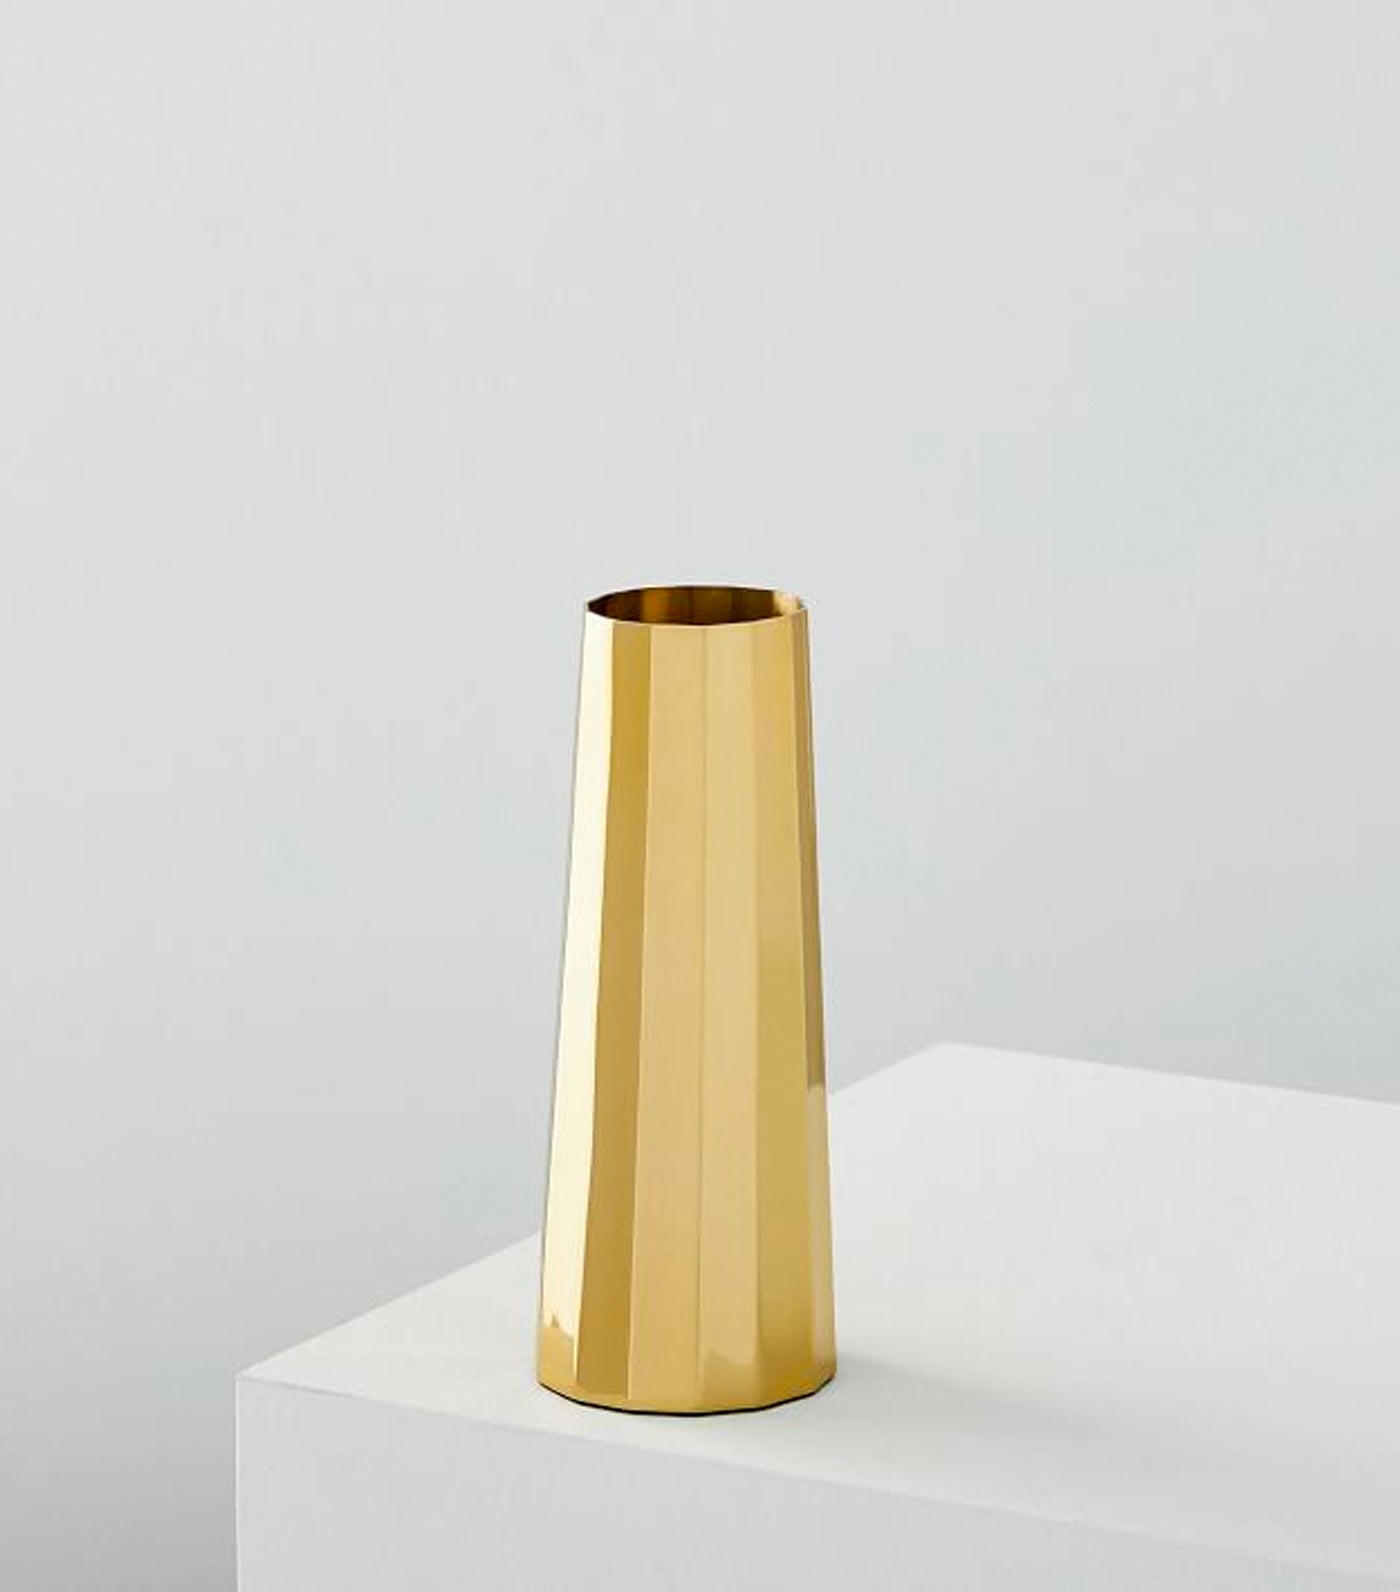 west elm Foundations Brass Vases